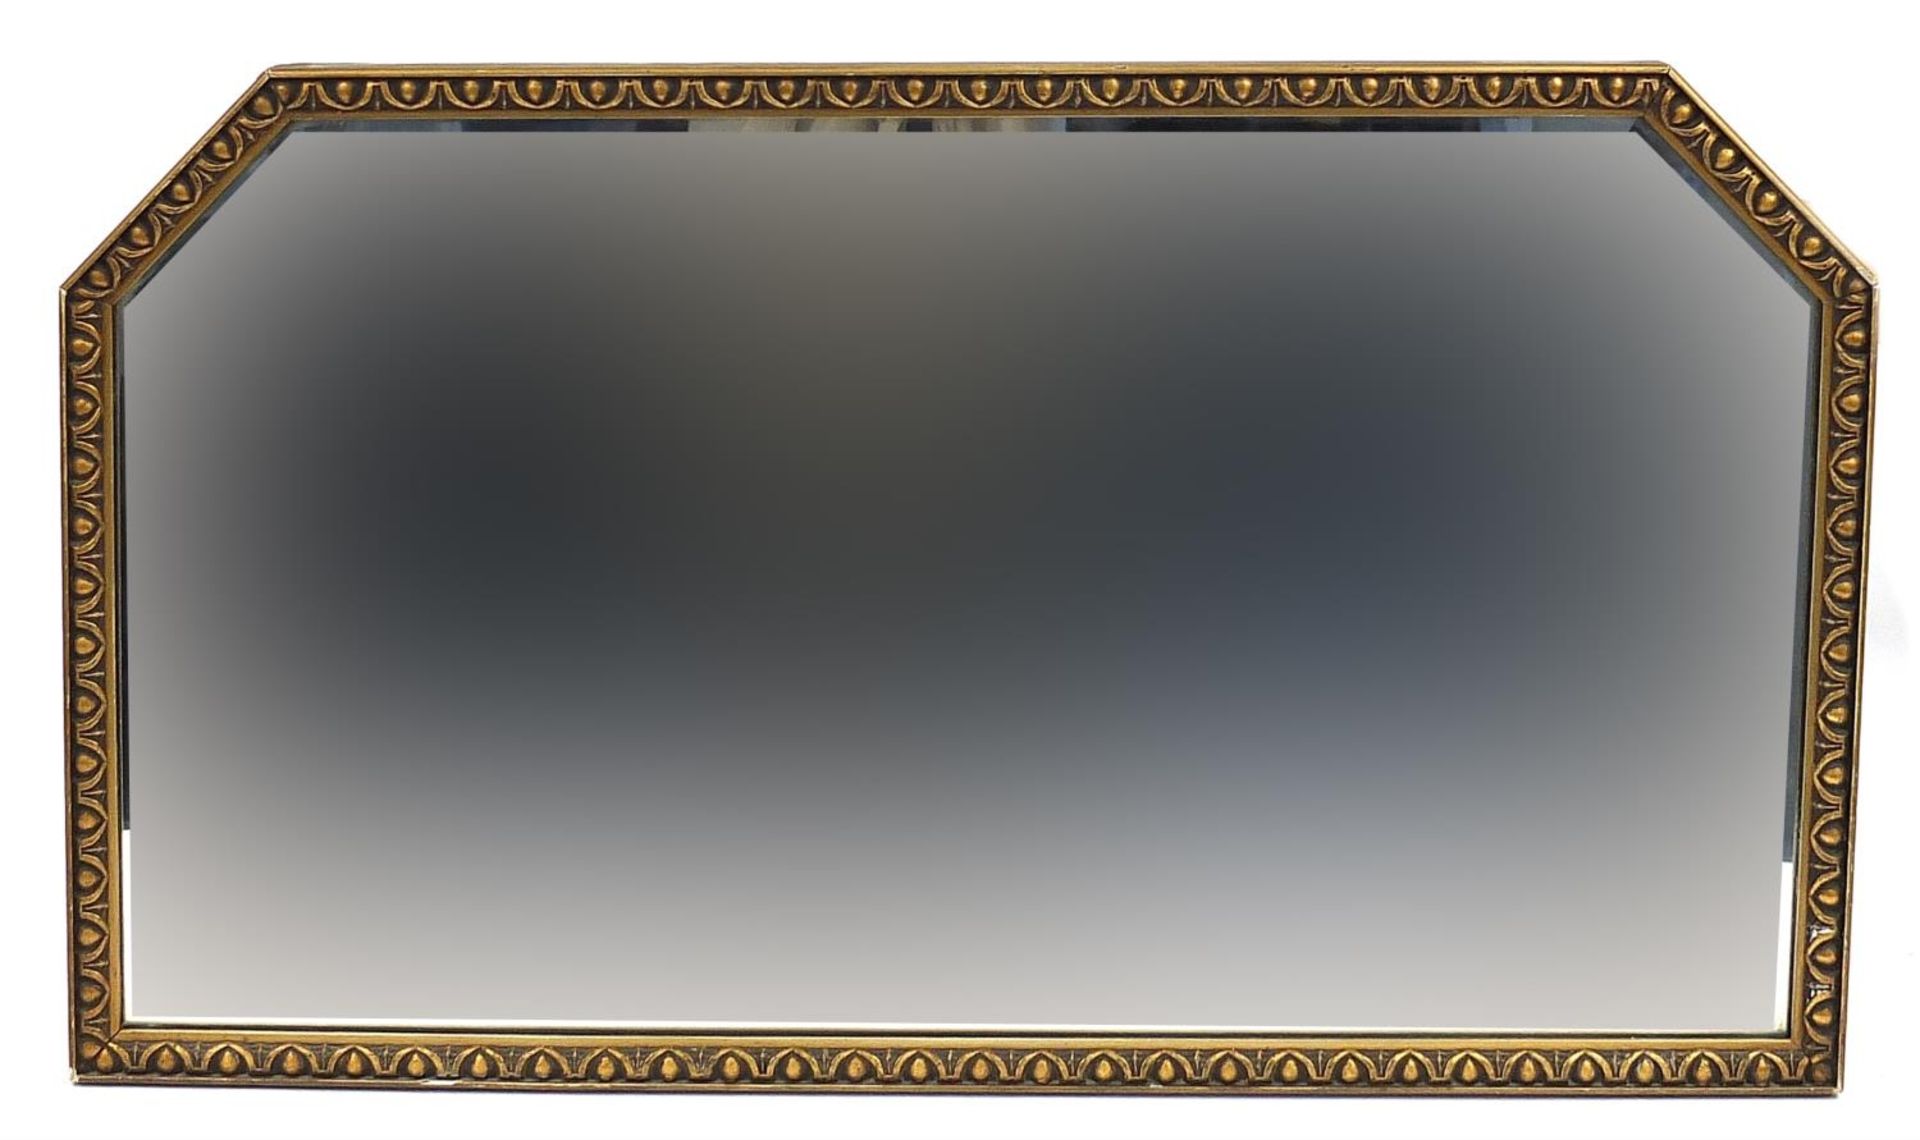 Gilt framed bevelled glass mirror, 73cm wide